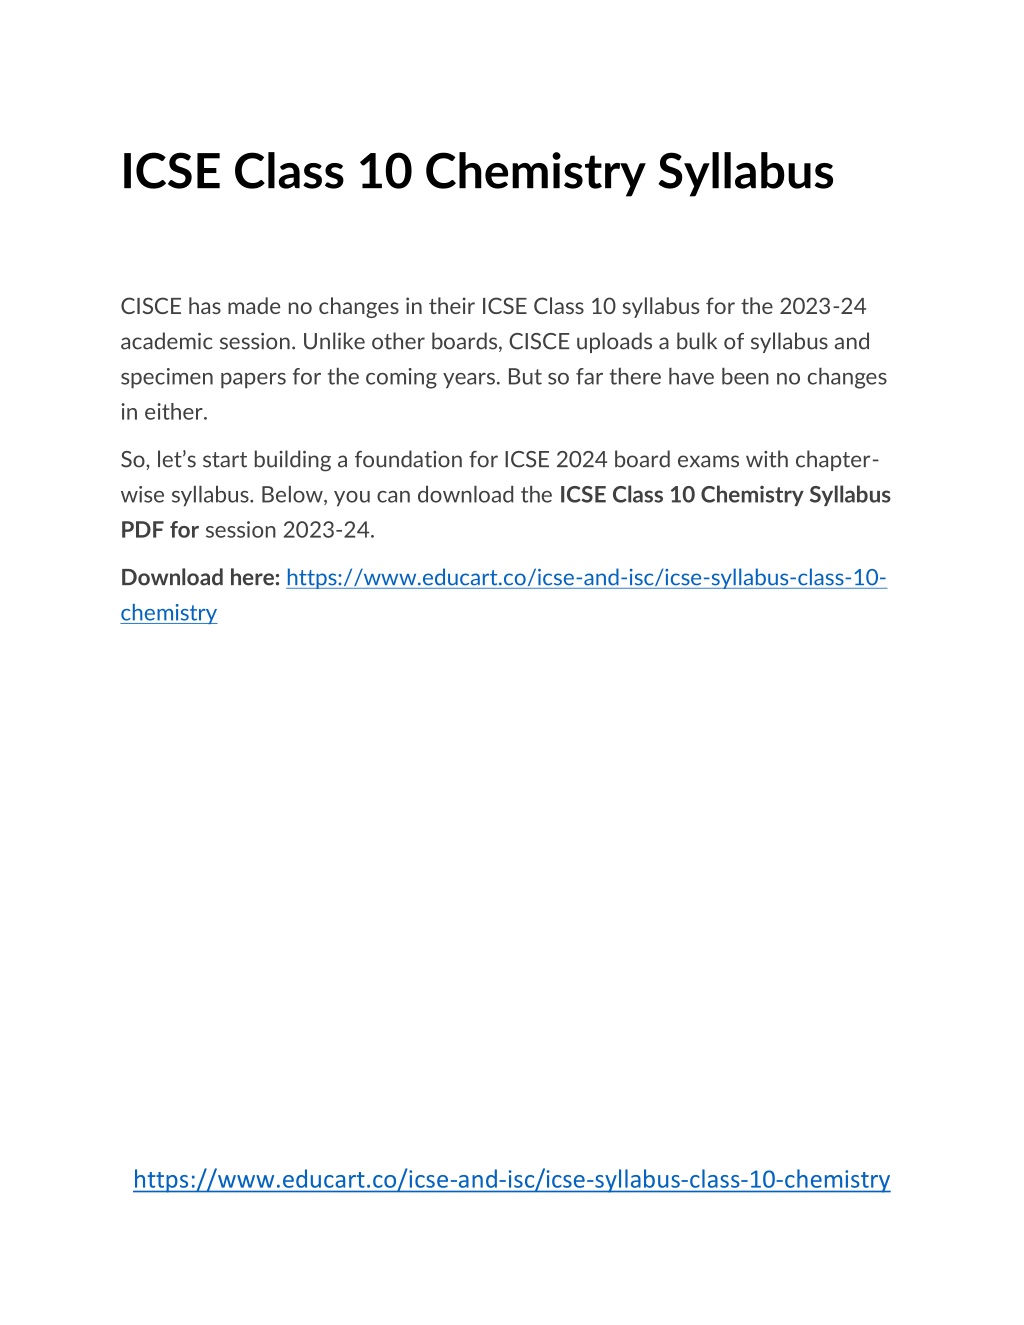 PPT ICSE Class 10 Chemistry Syllabus PowerPoint Presentation, free